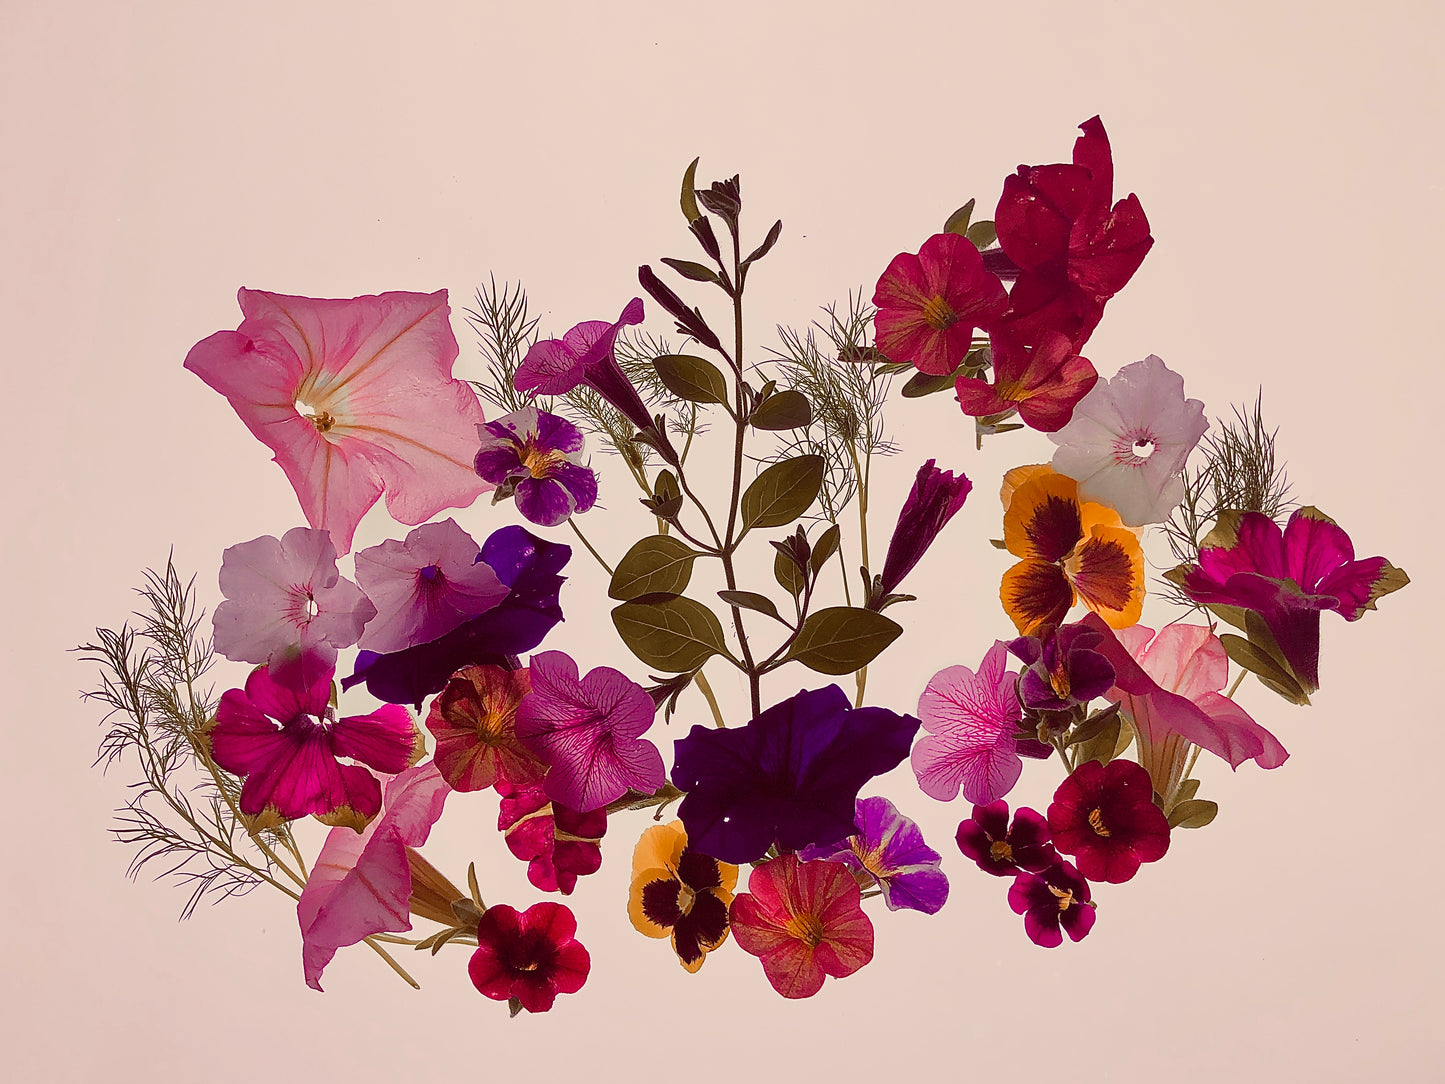 Floralis Framed Botanical Photo Art Print